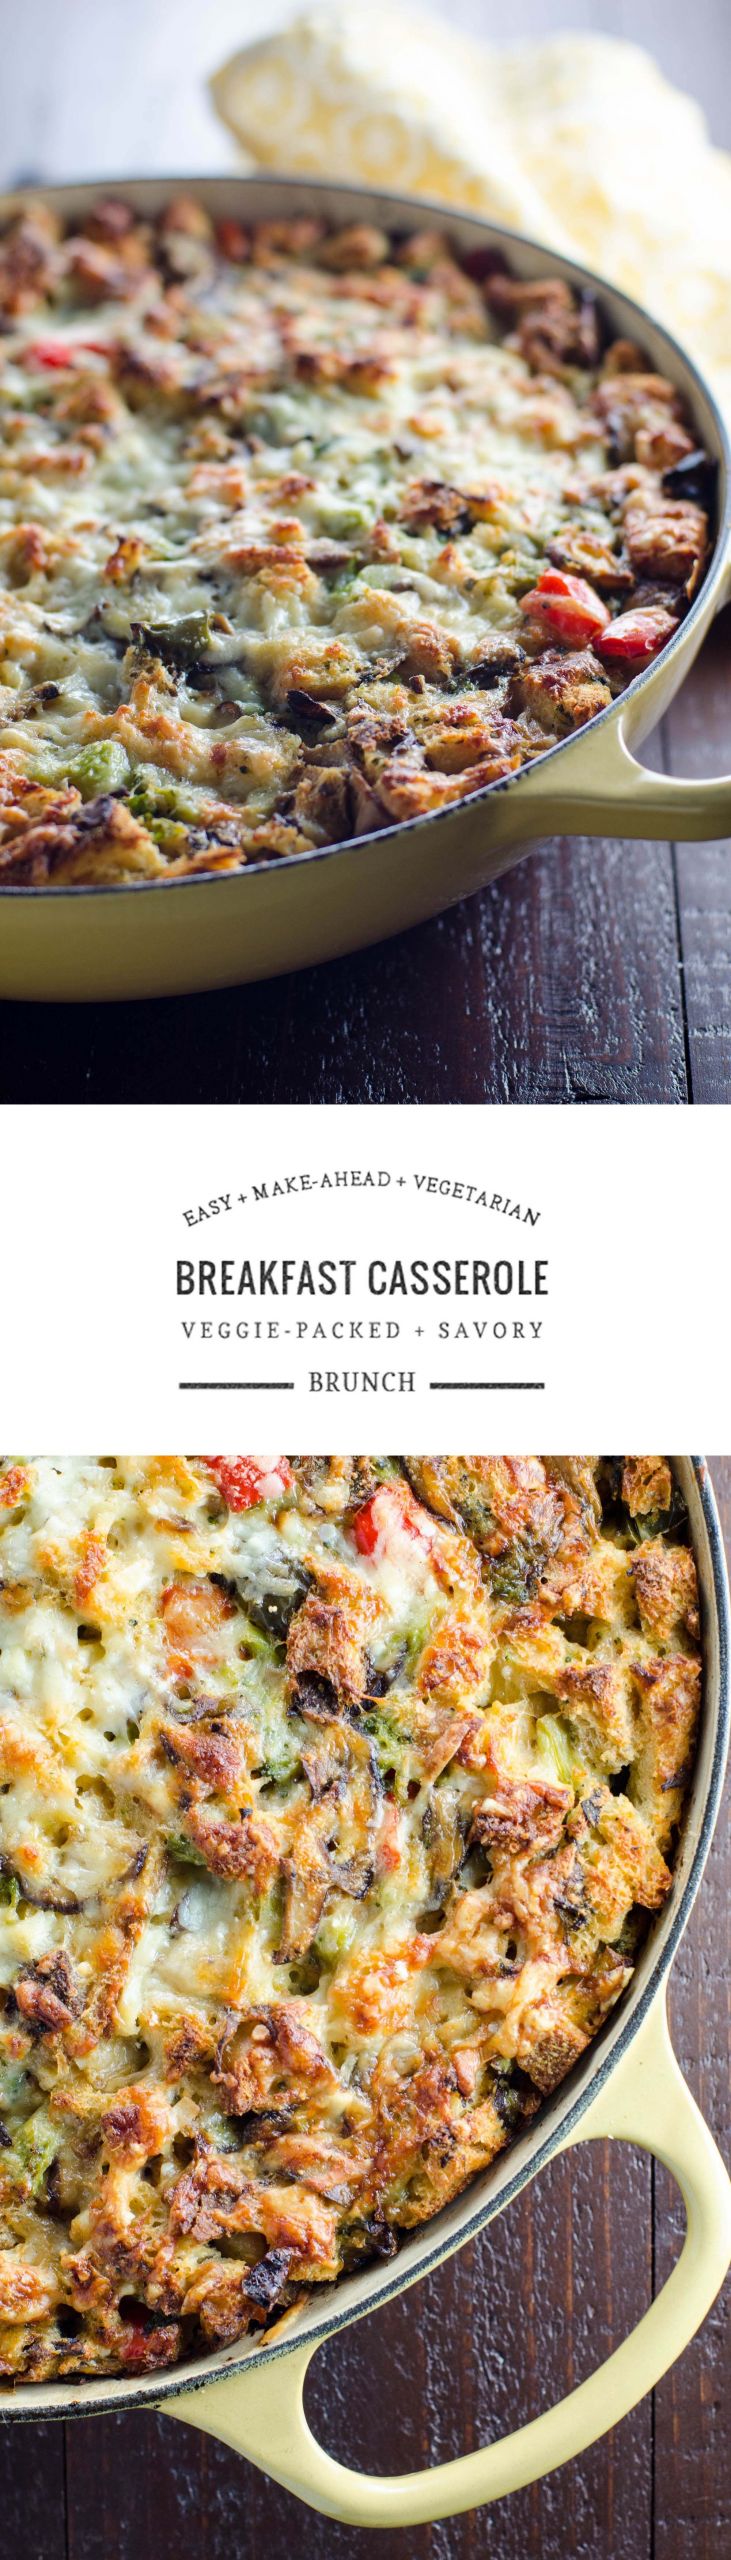 Vegetarian Brunch Recipes Make Ahead
 Easy Ve arian Make Ahead Breakfast Casserole